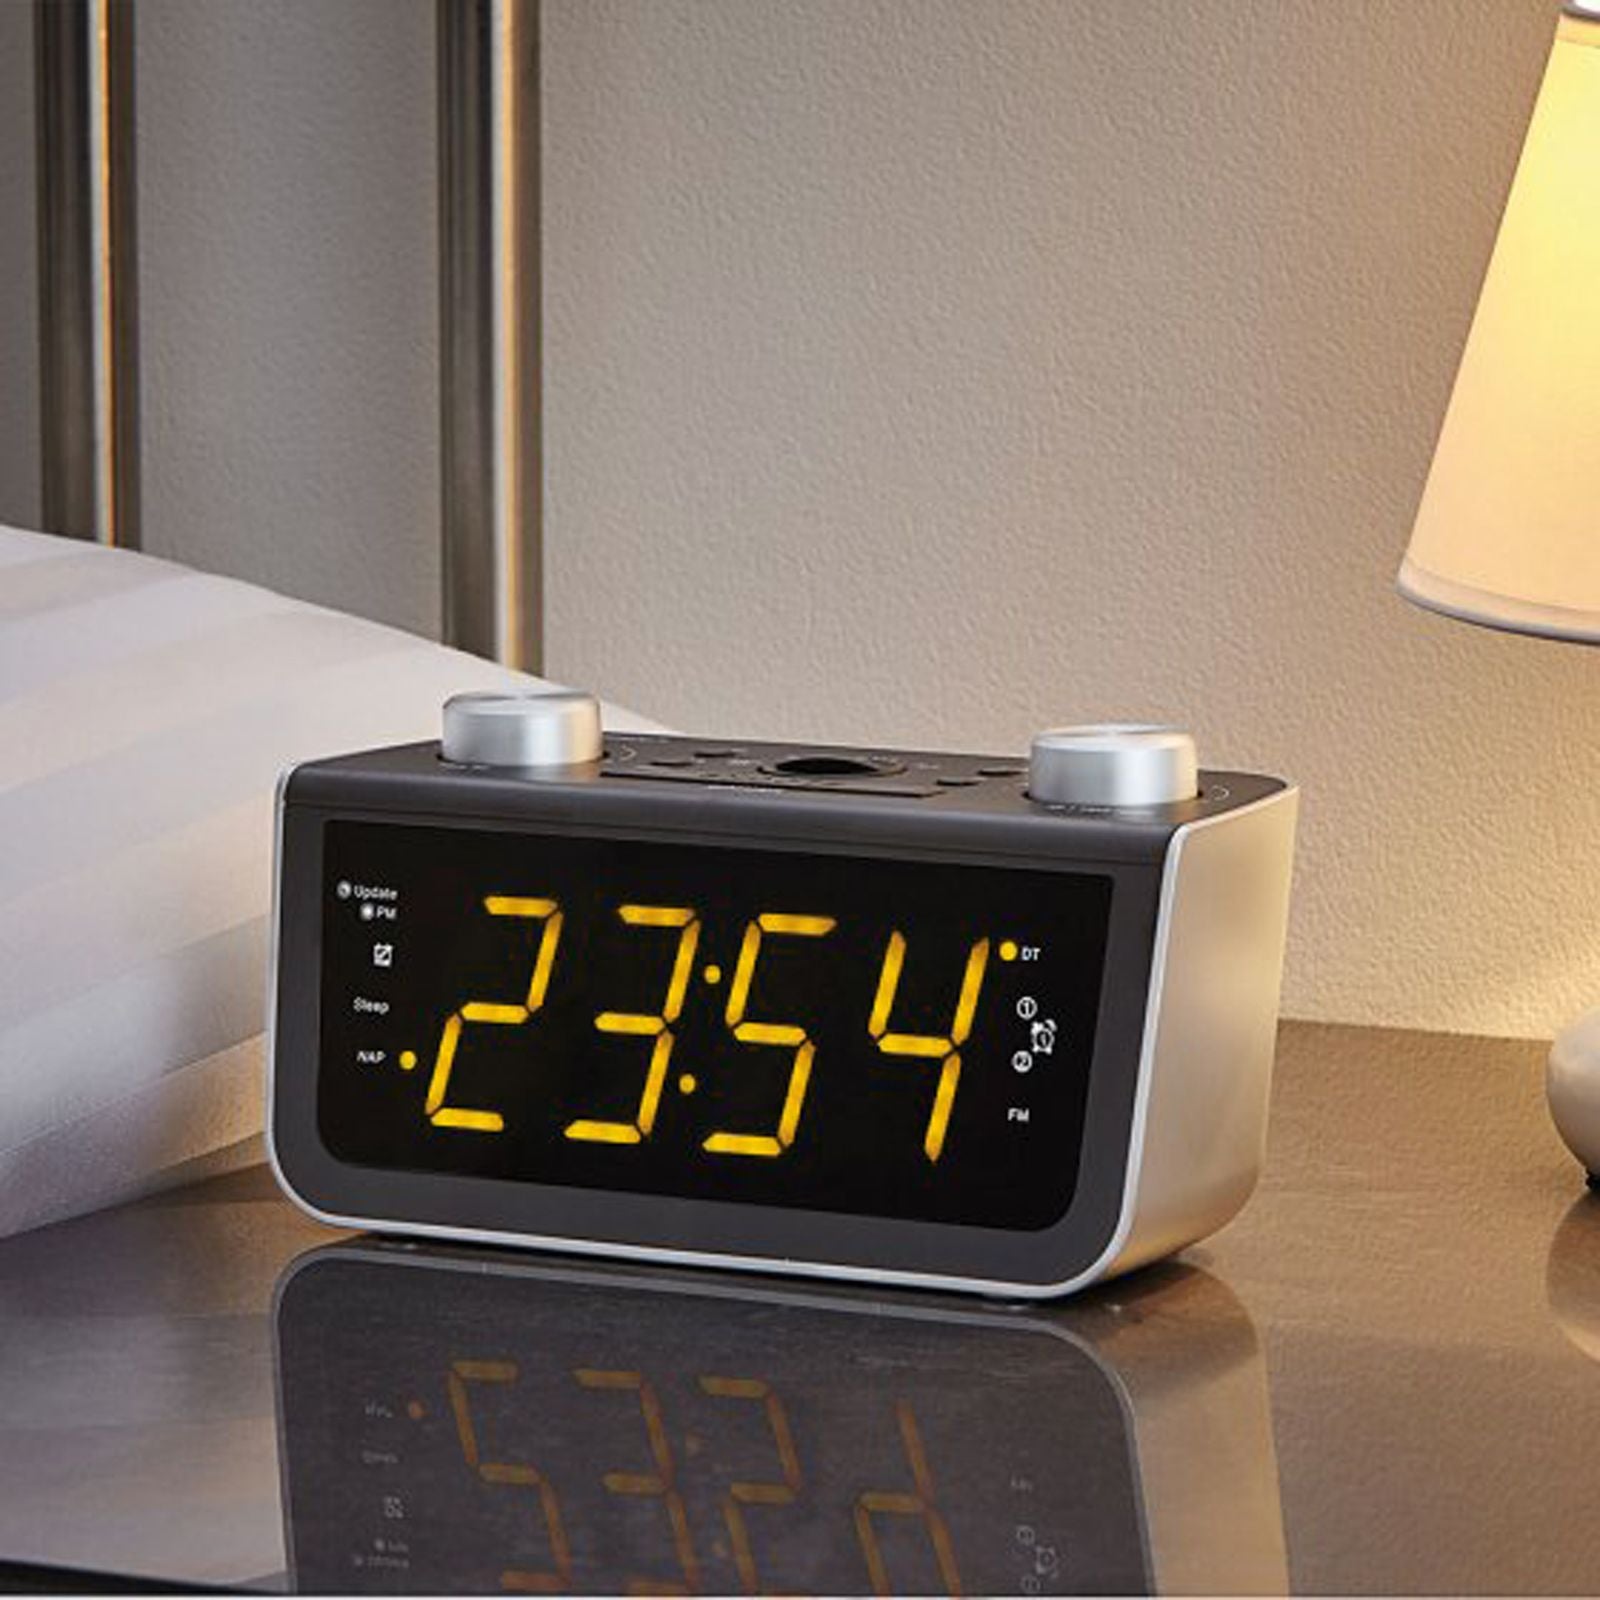 Soundmaster FUR5005 FM PLL clock radio radio alarm clock radio alarm clock dual alarm dimmable jumbo display